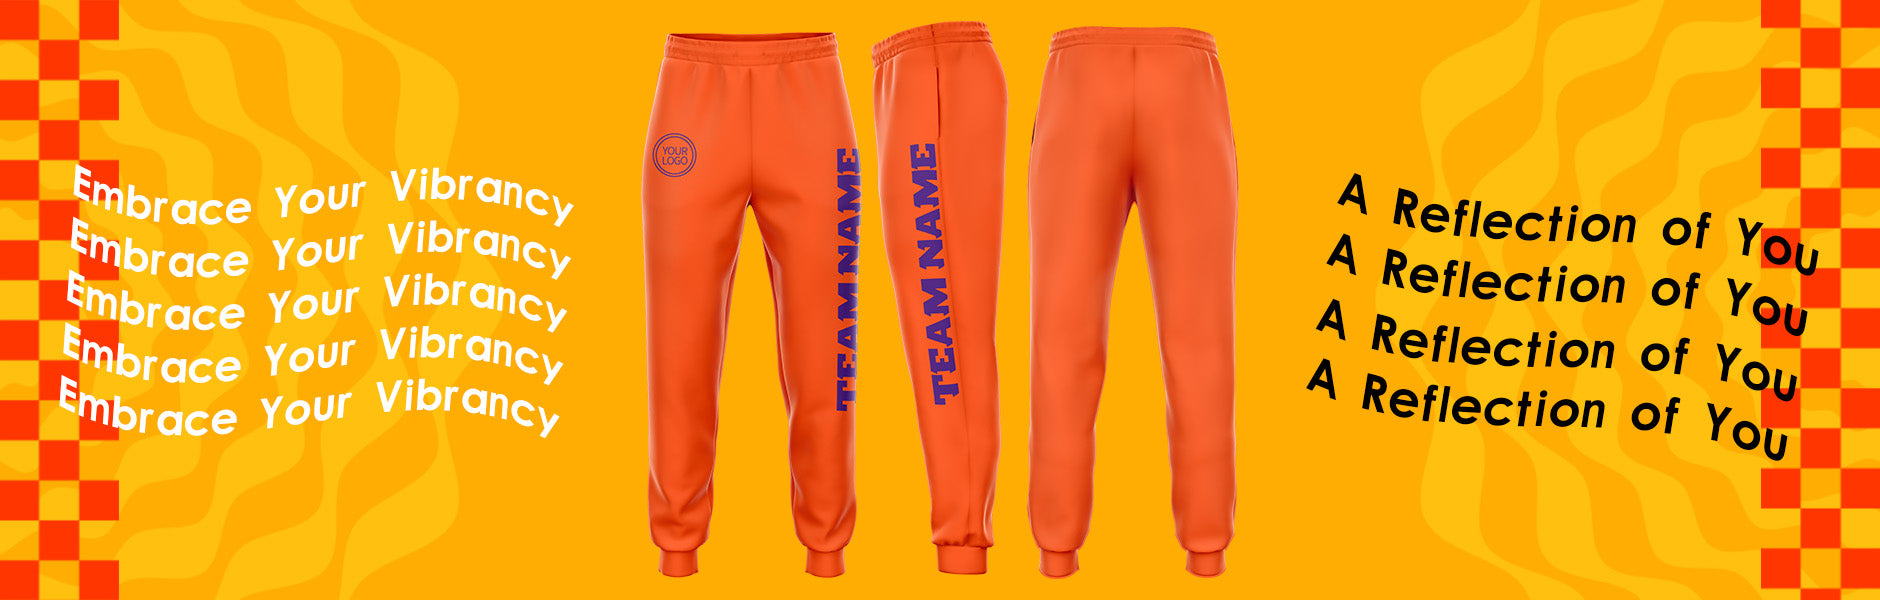 custom orange sweatpants